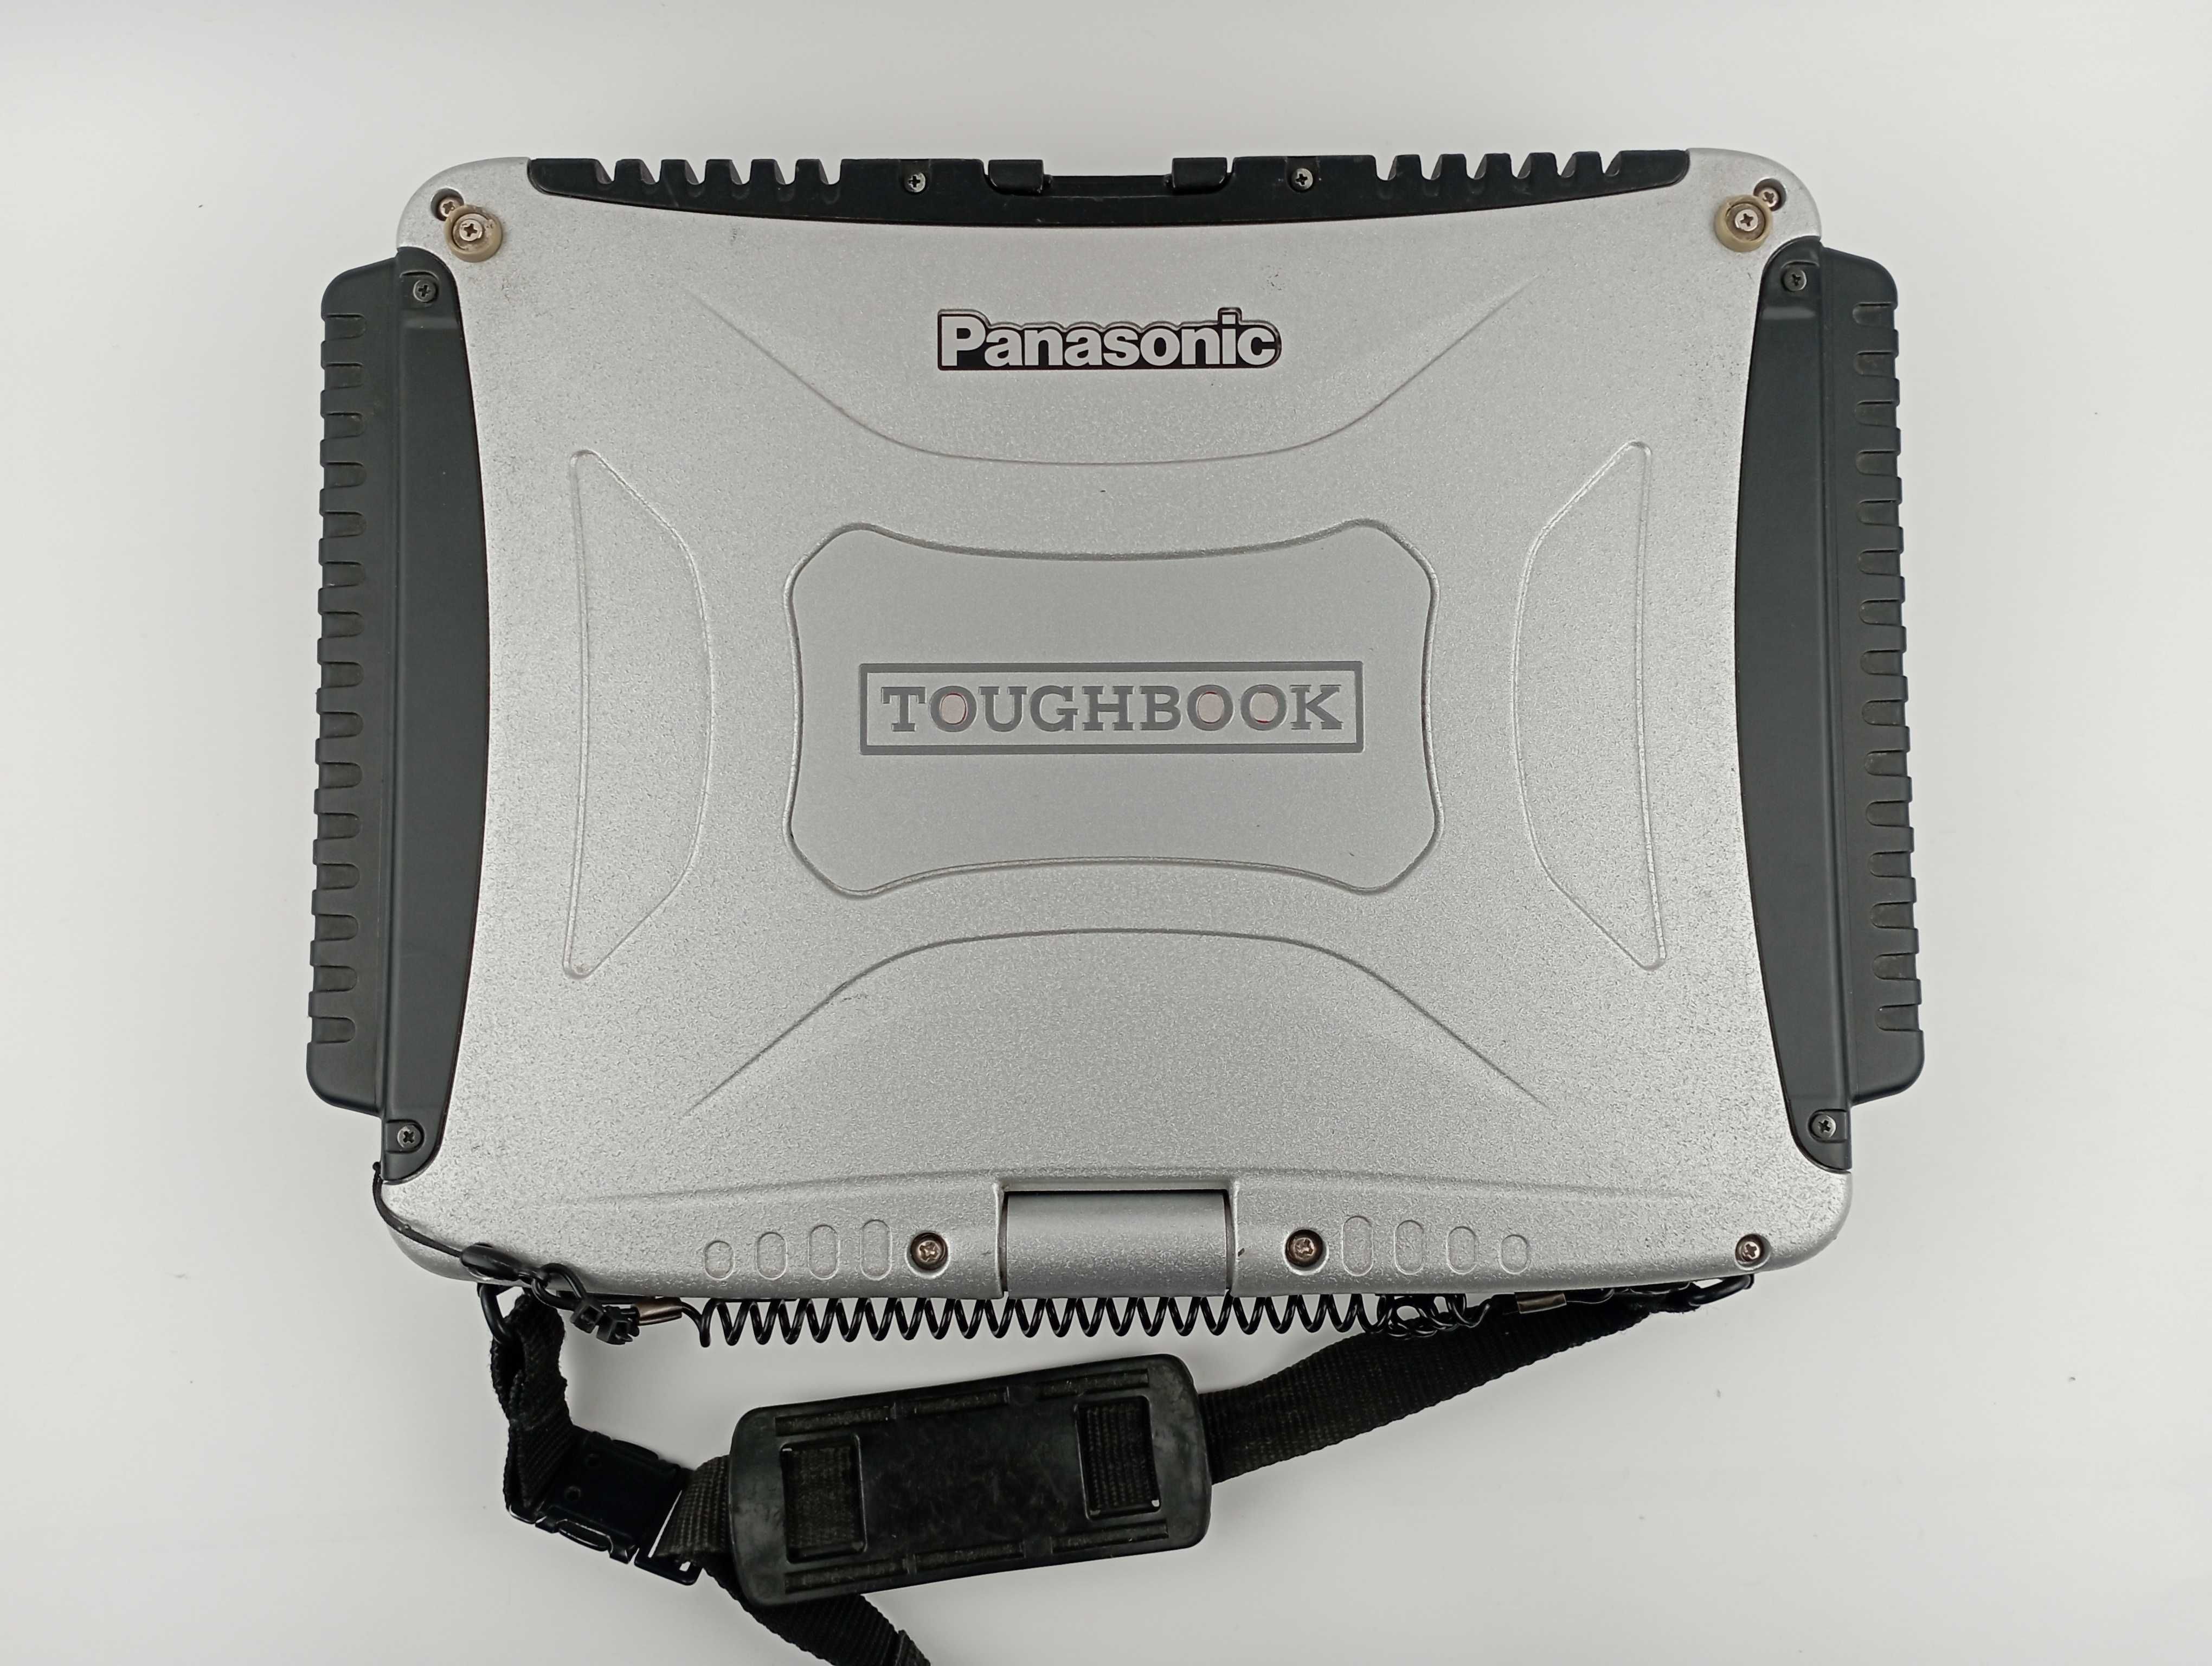 Захищений ноутбук Panasonic Toughbook CF-19 MK7 з GPS+3G